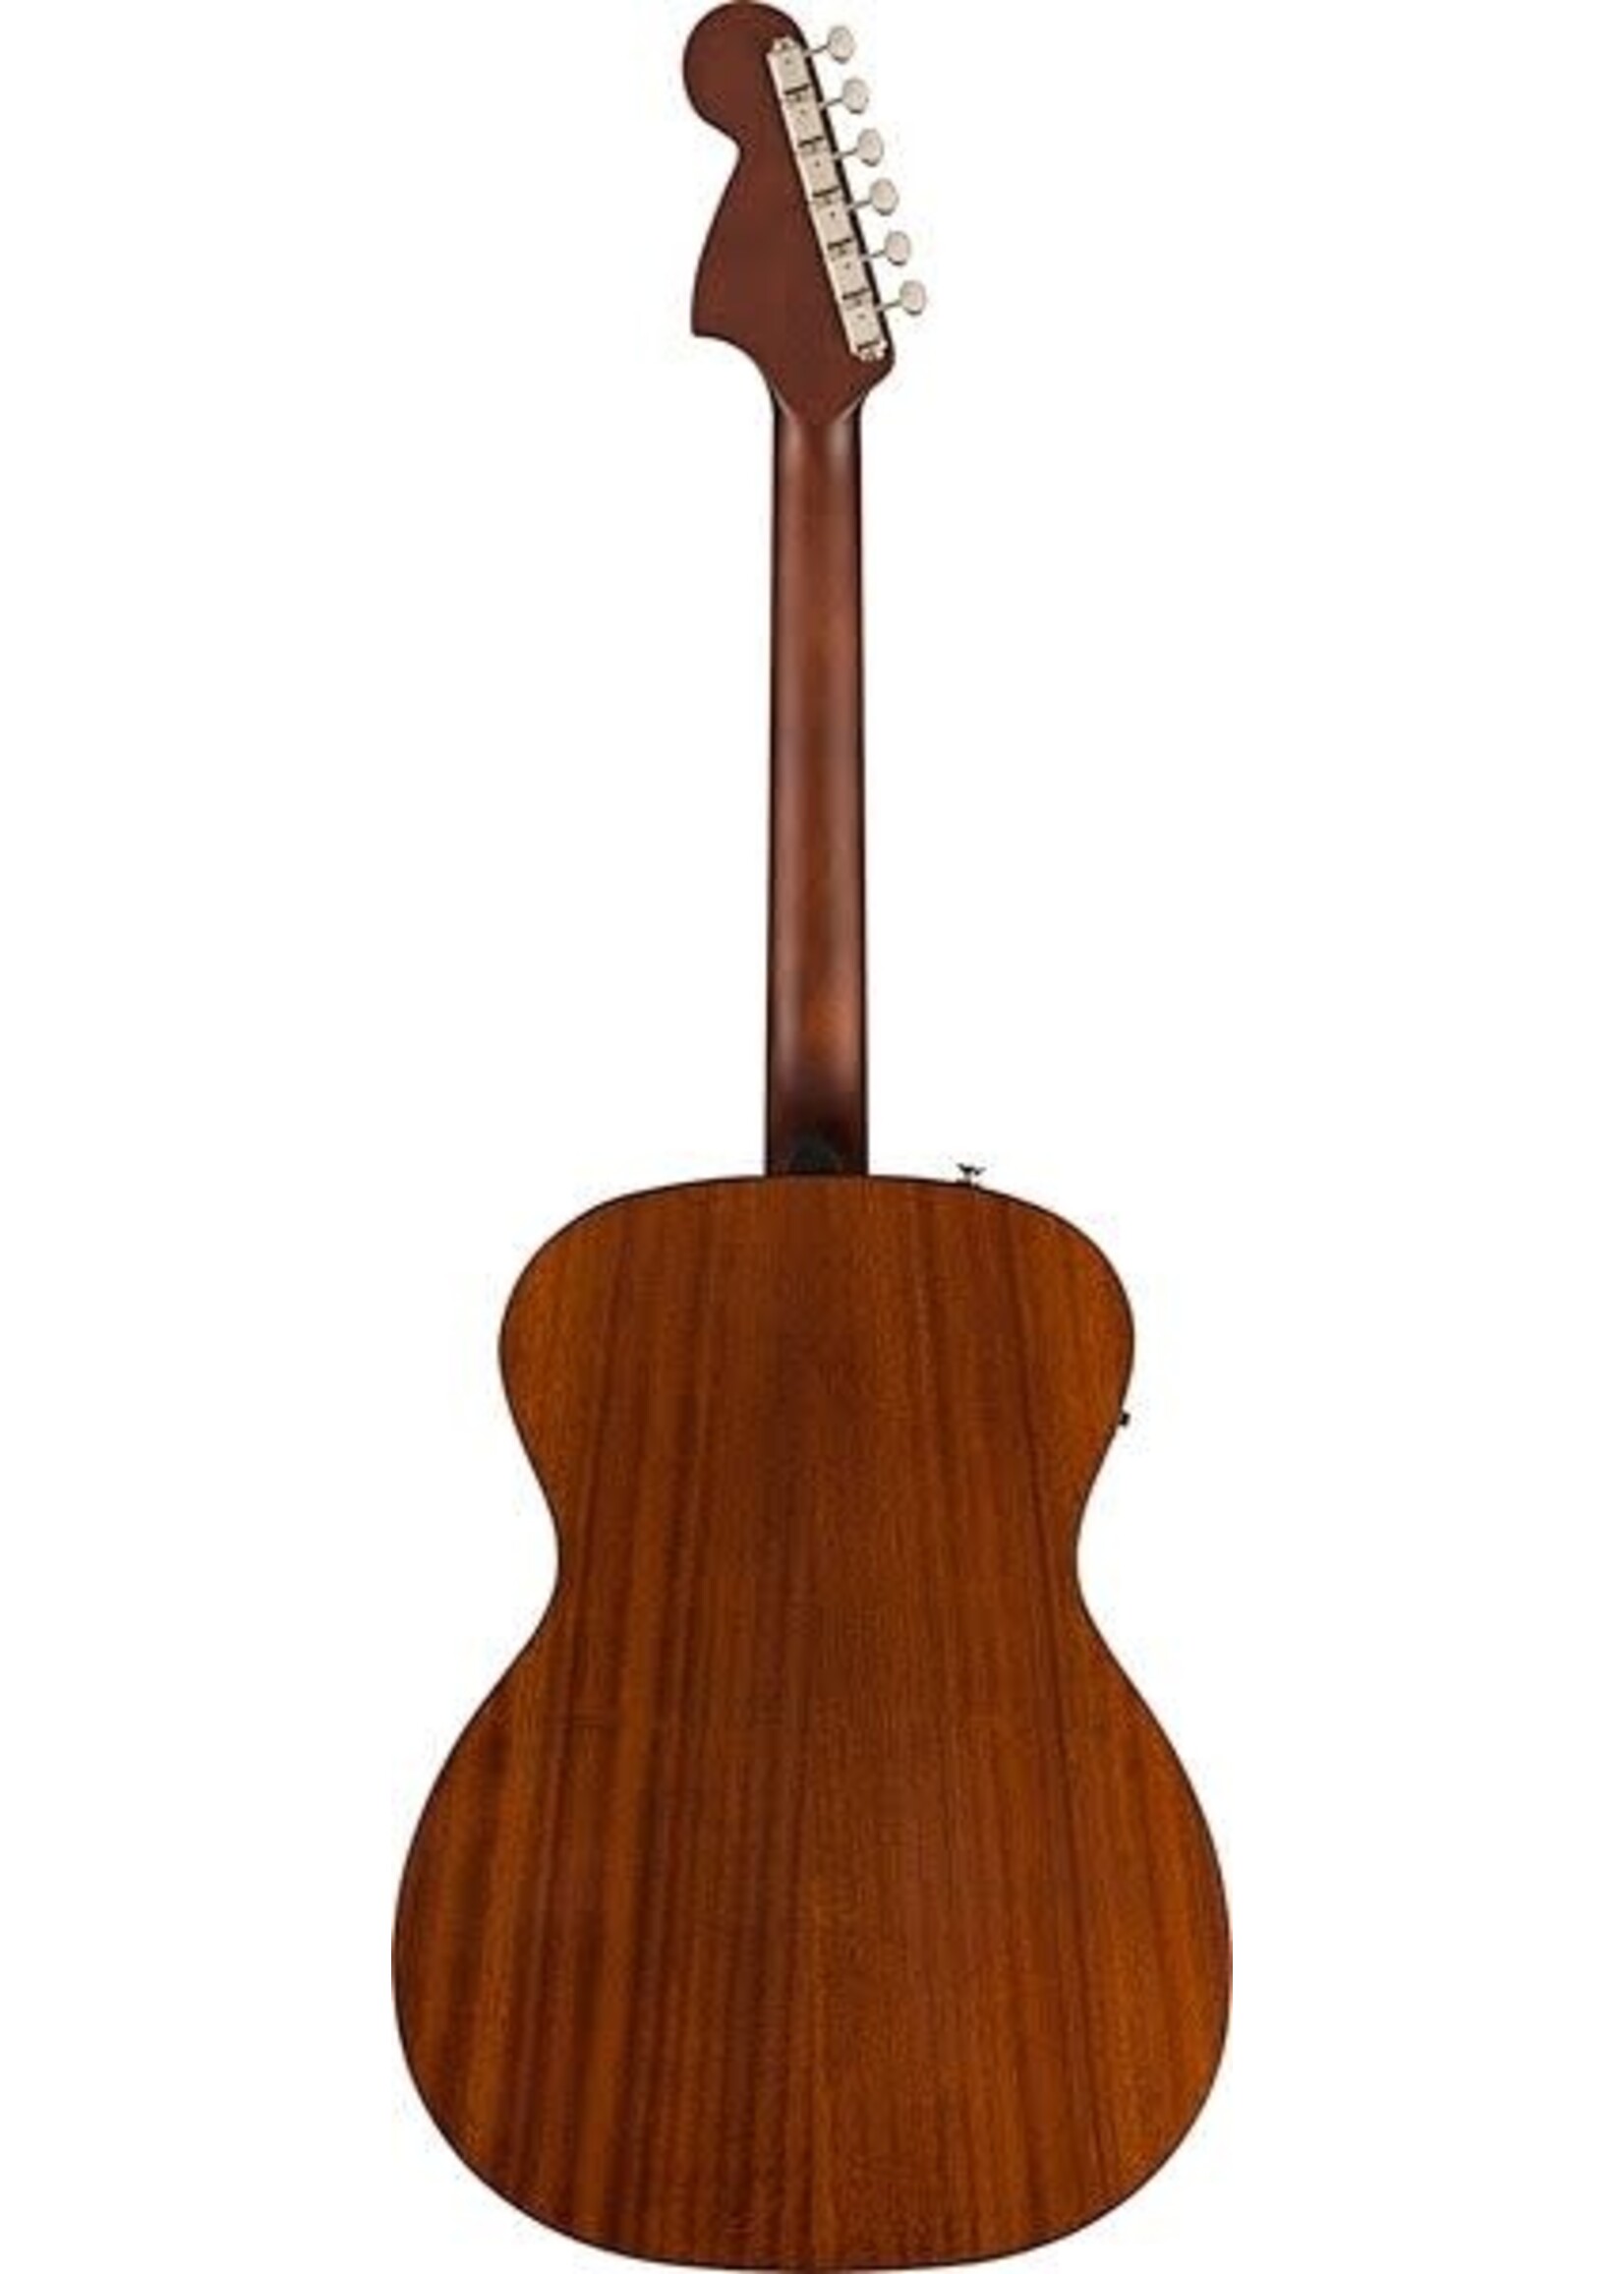 Fender Fender 0973052122 Monterey Standard All-Mahogany Acoustic-Electric Guitar Natural